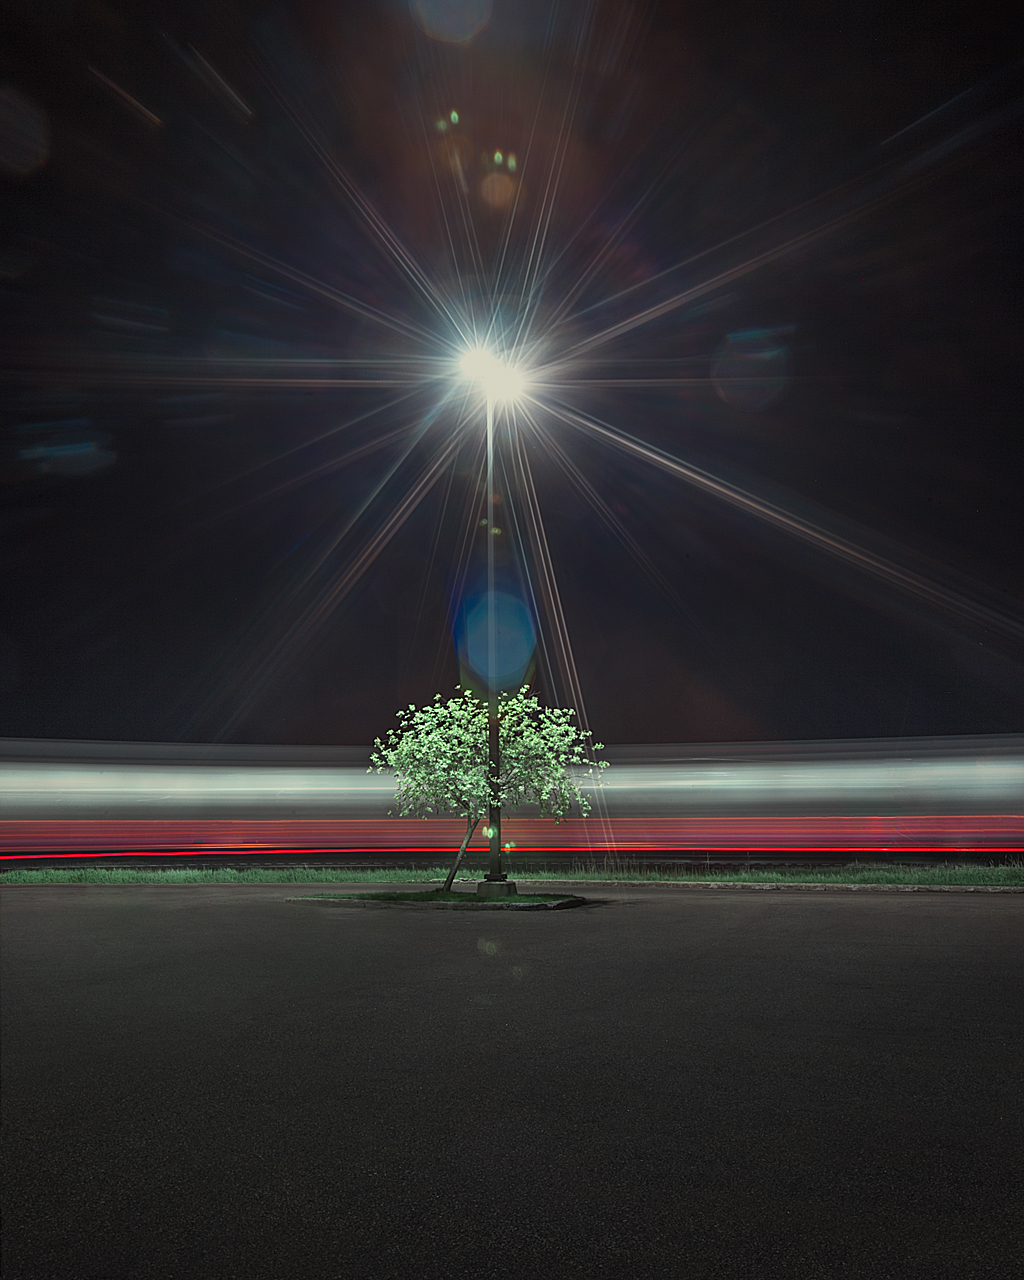 Visions benoit paille night light Landscape KLOPELGAG print art FINEART CompactCamera ricohgr2